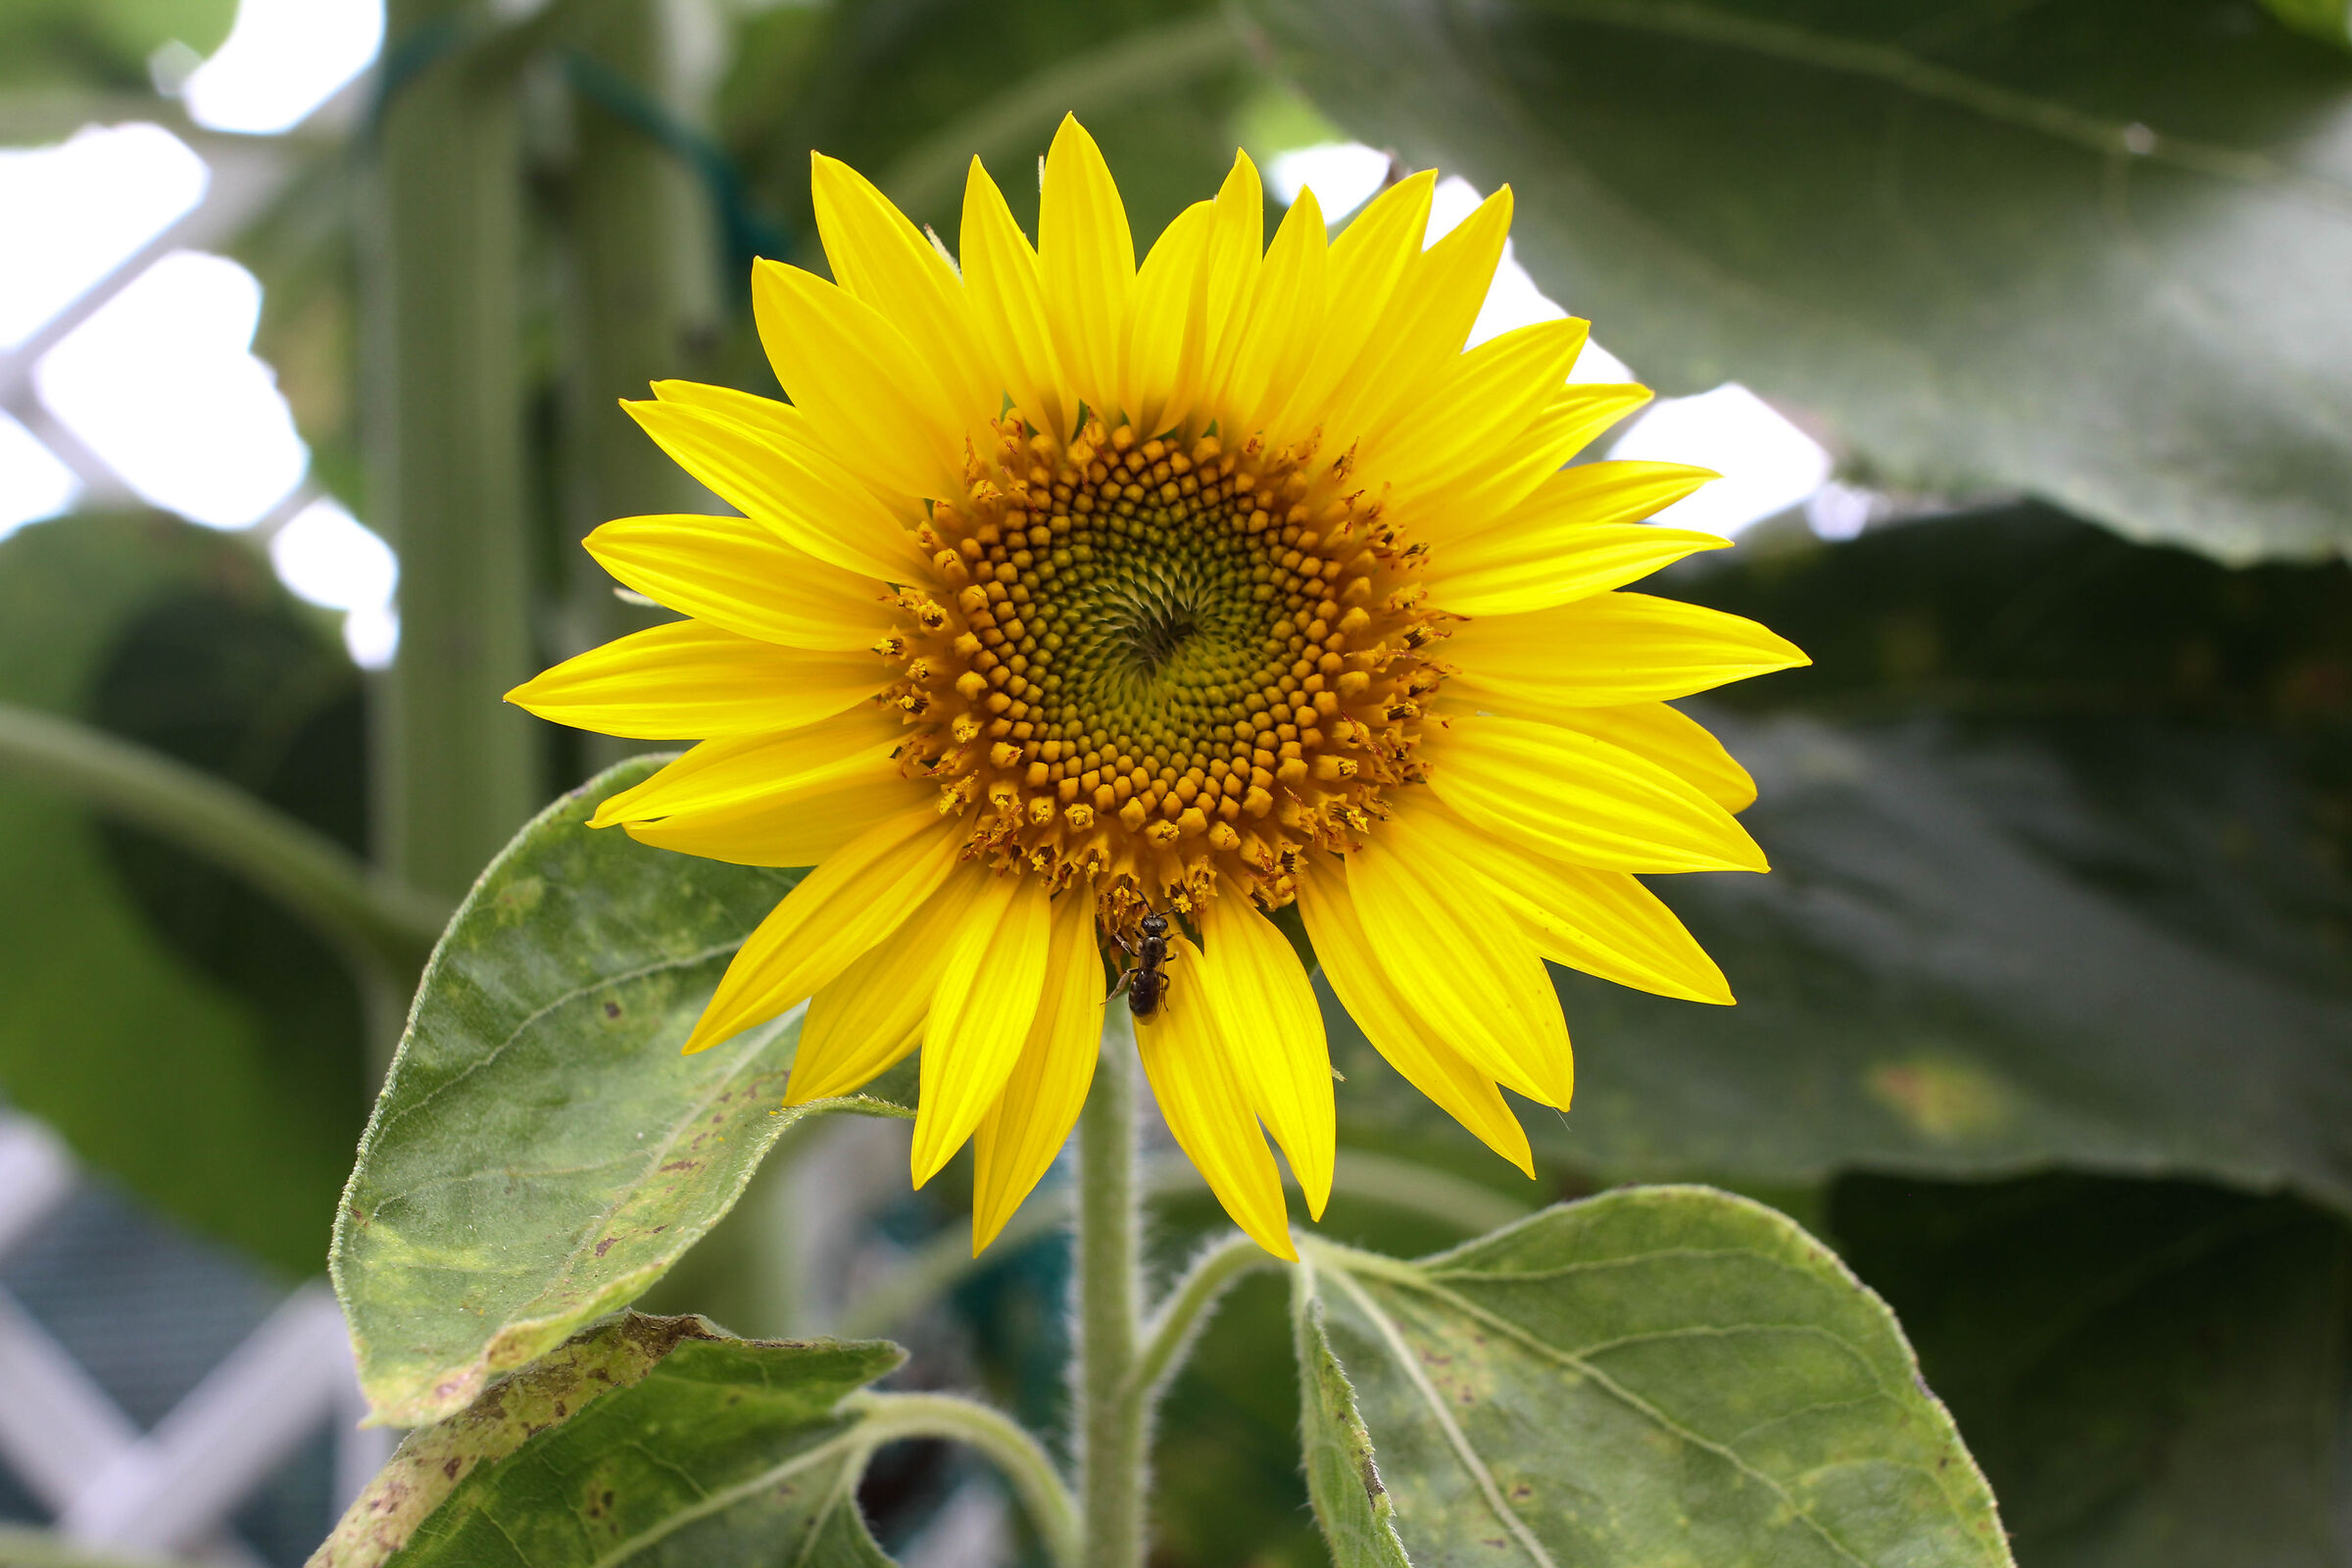 Vespa on sunflower...